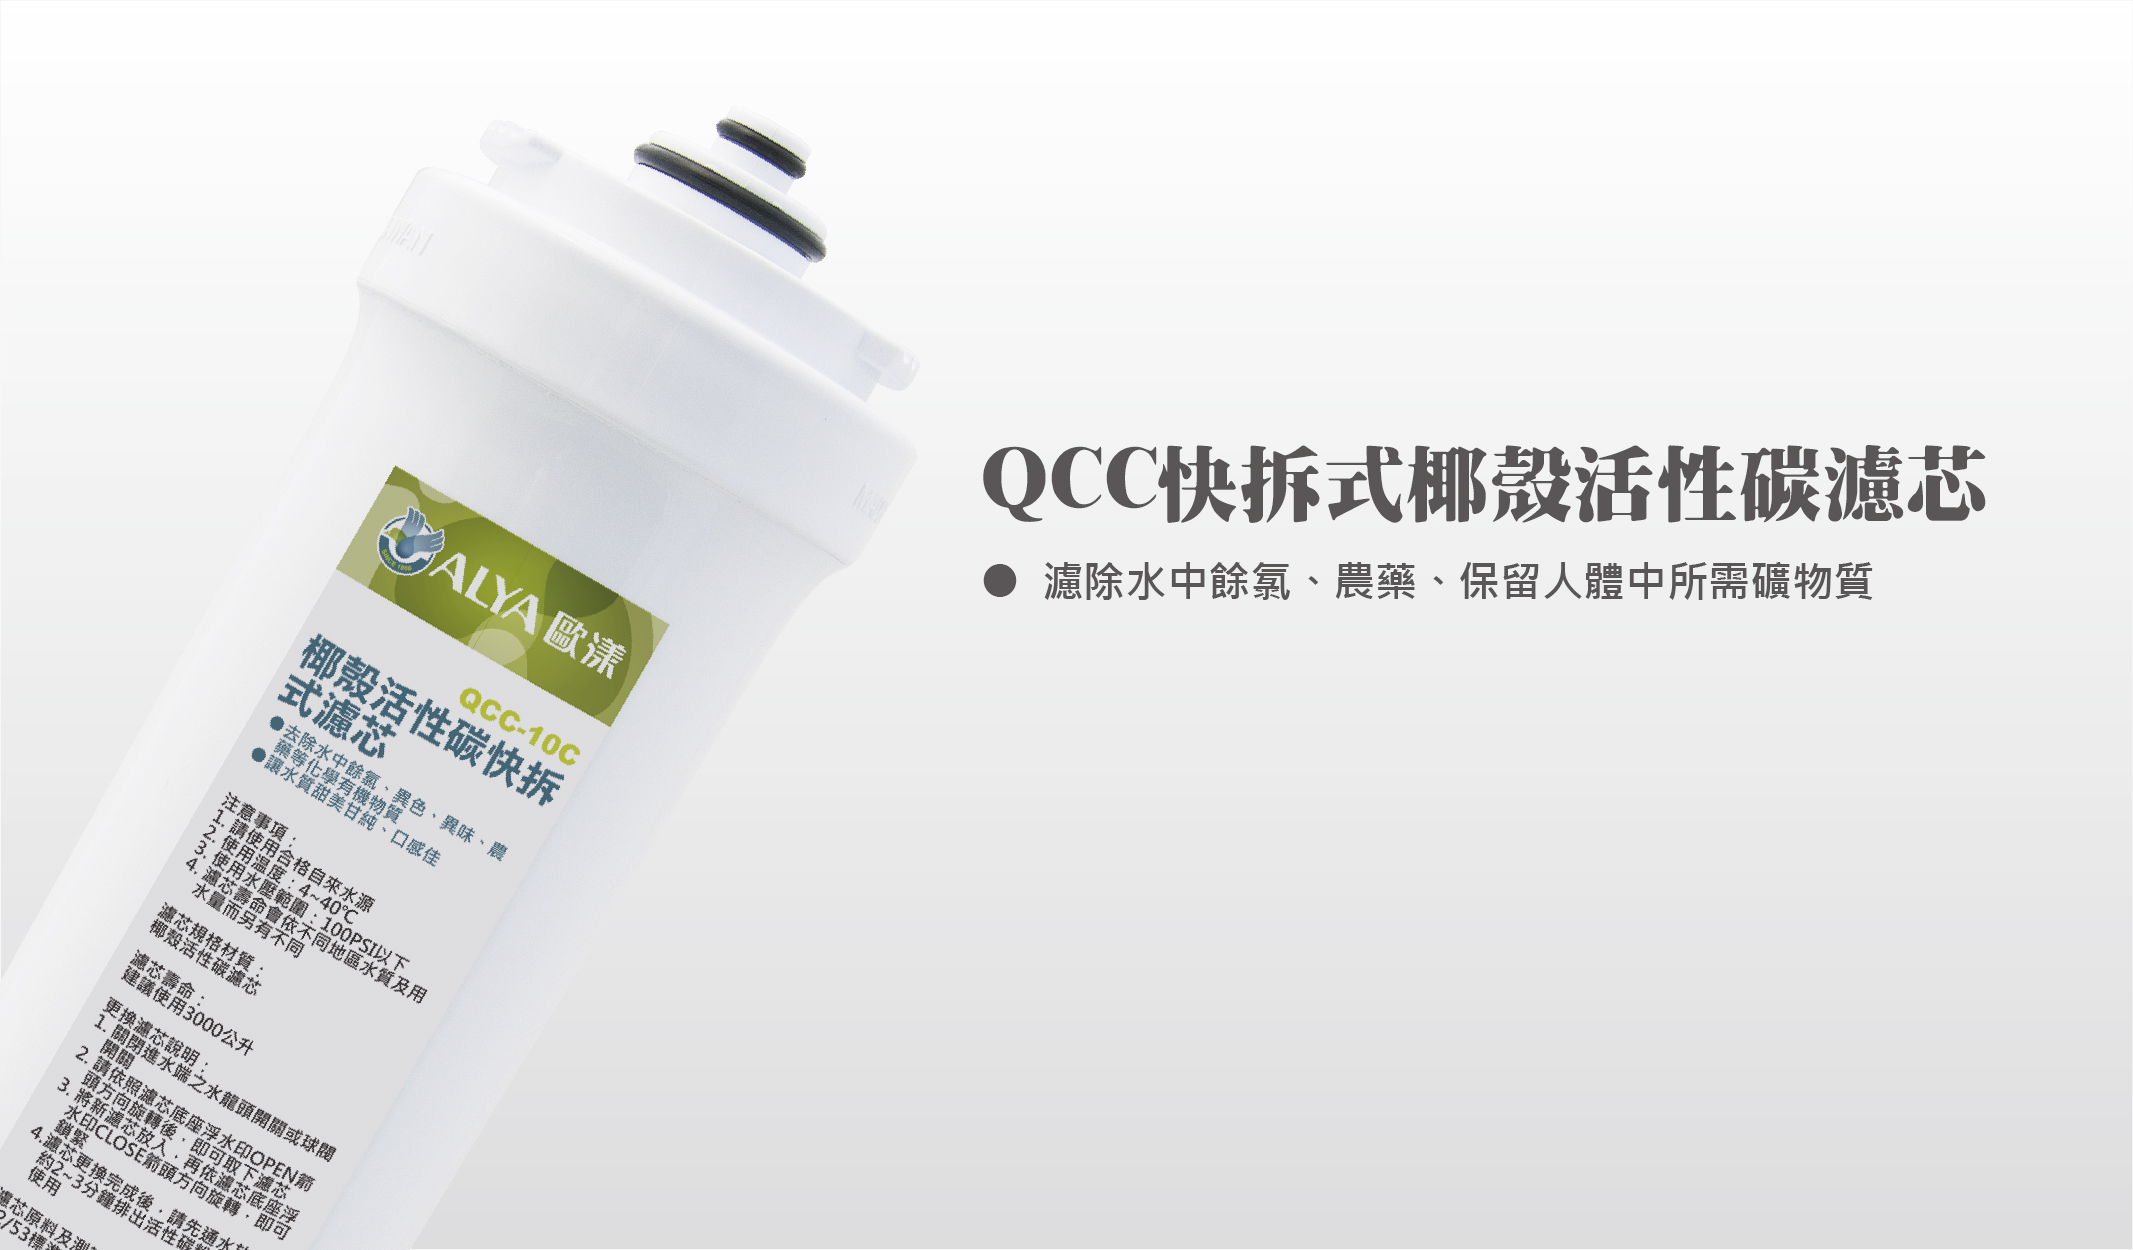 01.QCC-10C_Quick Change Cartridge